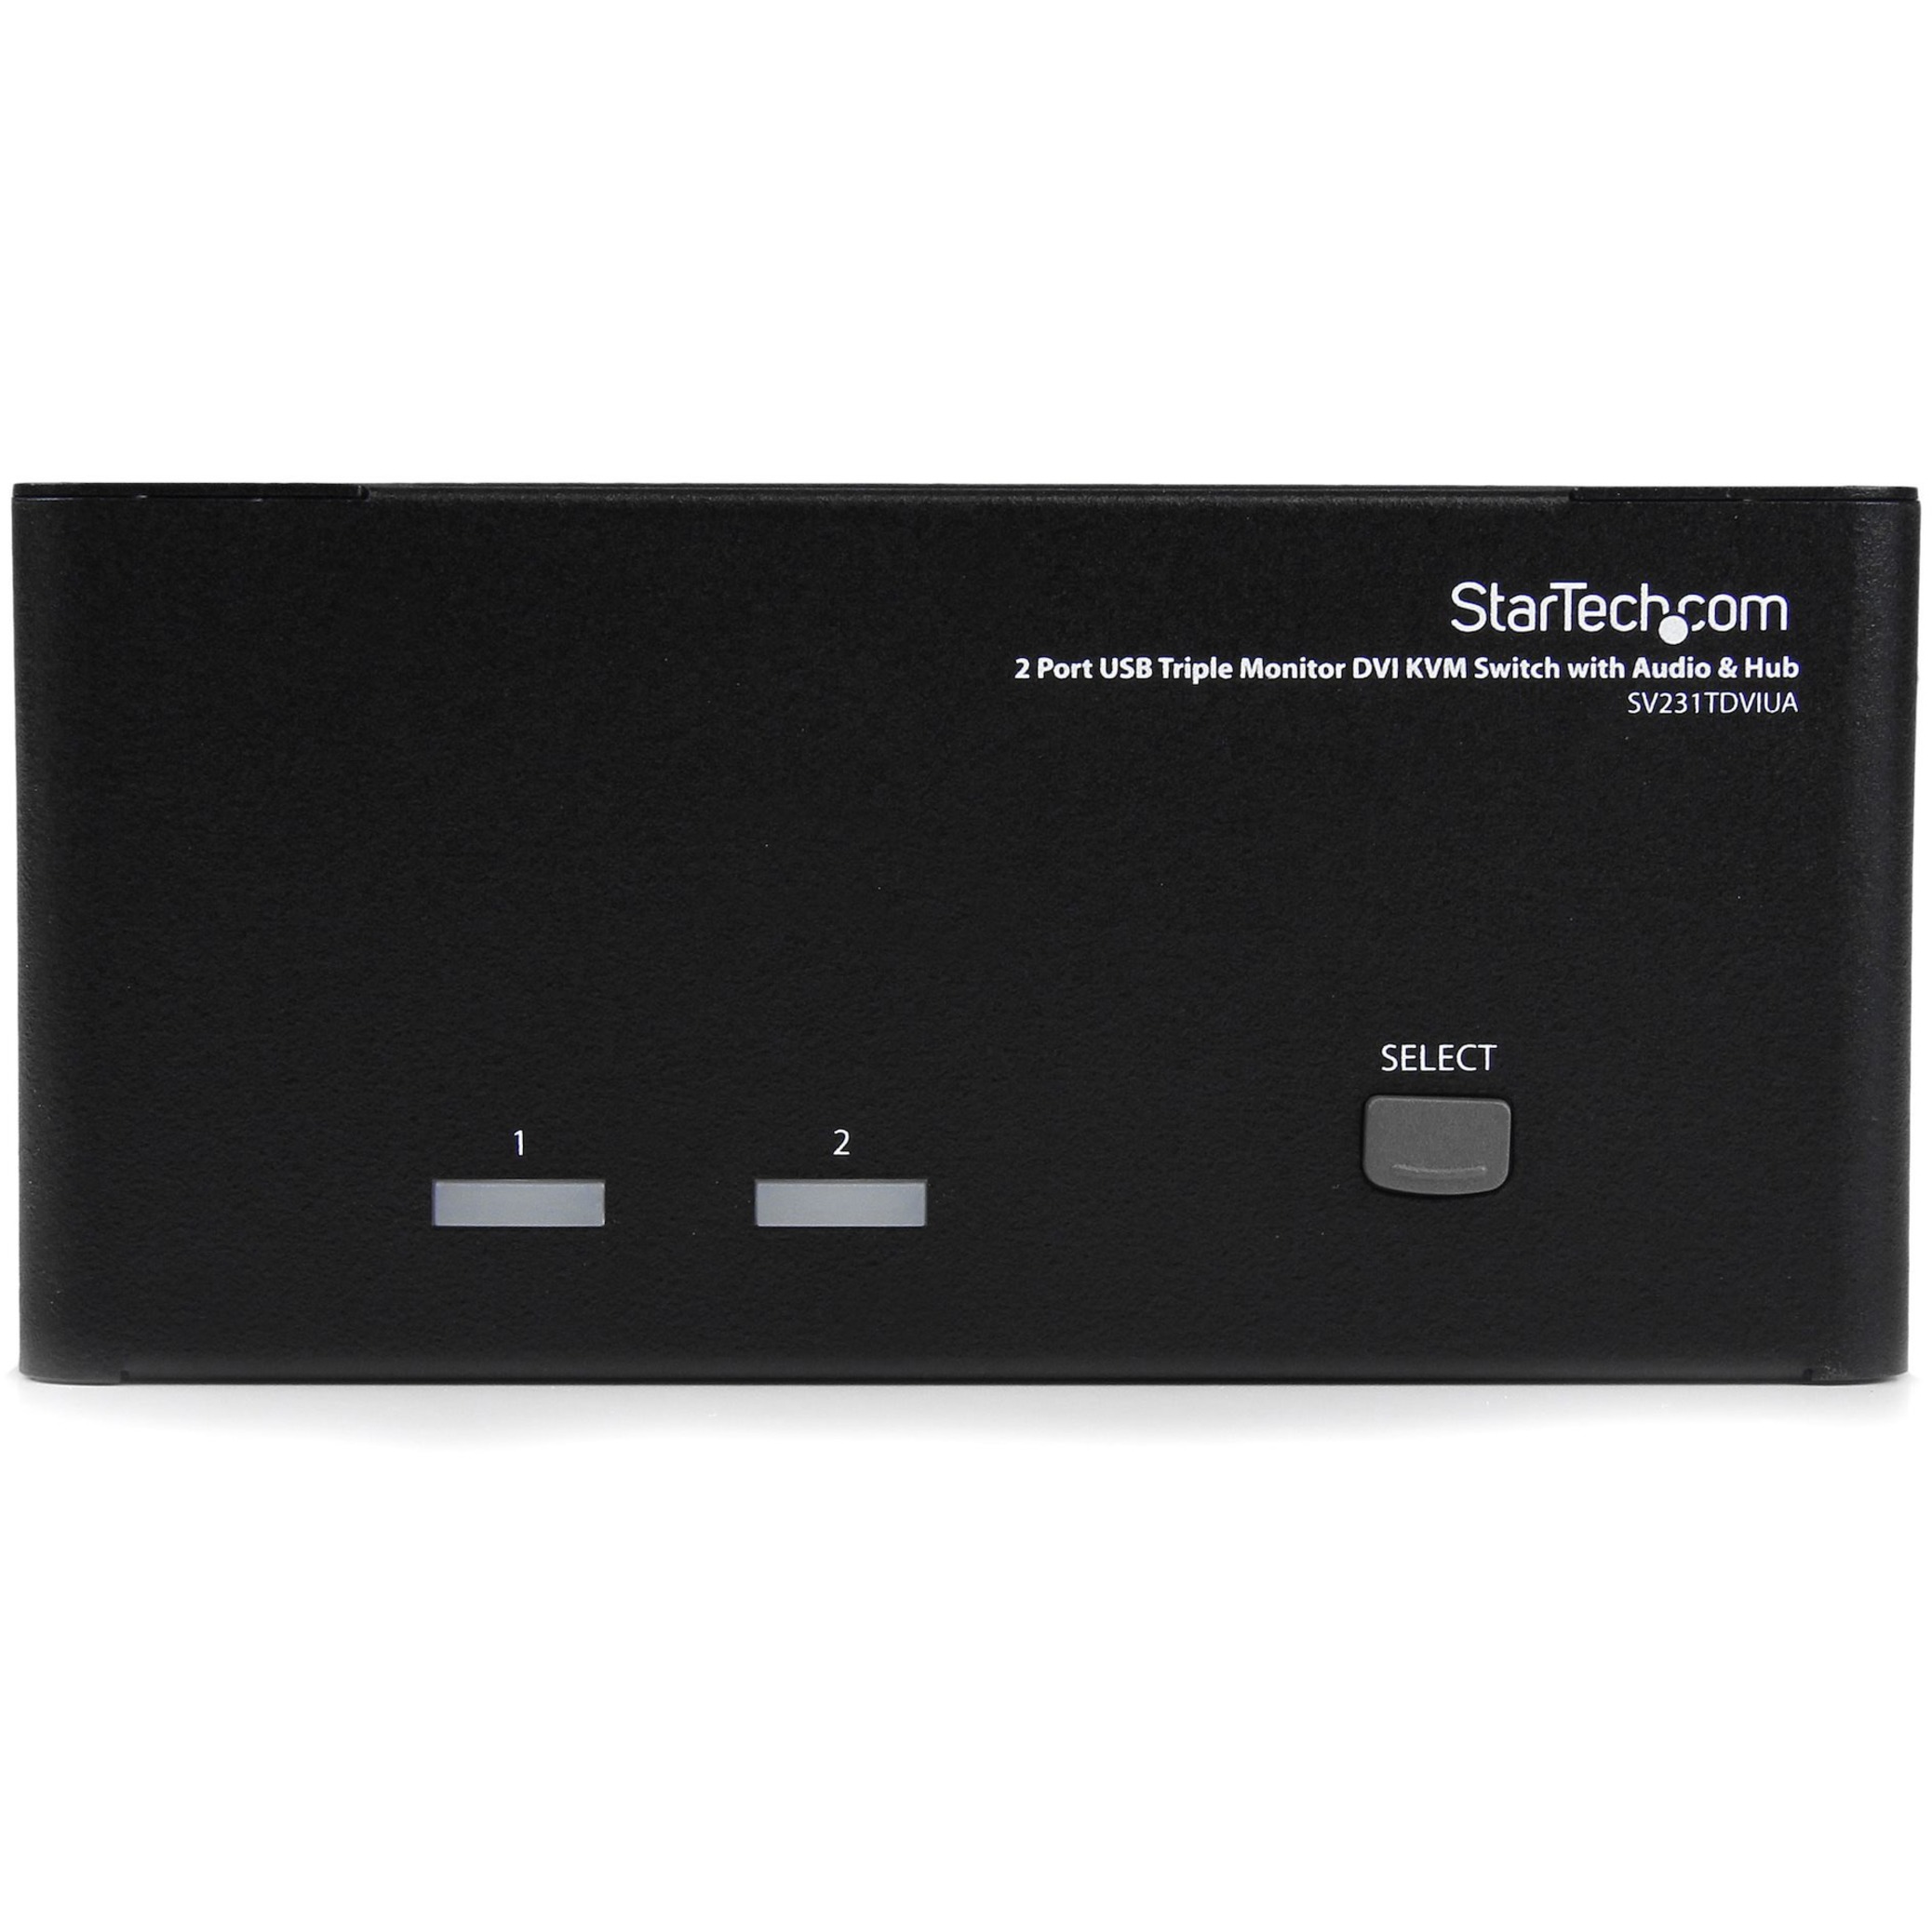 StarTech.com 2 Port Triple Monitor DVI USB KVM Switch with Audio & USB 2.0 Hub - image 3 of 3